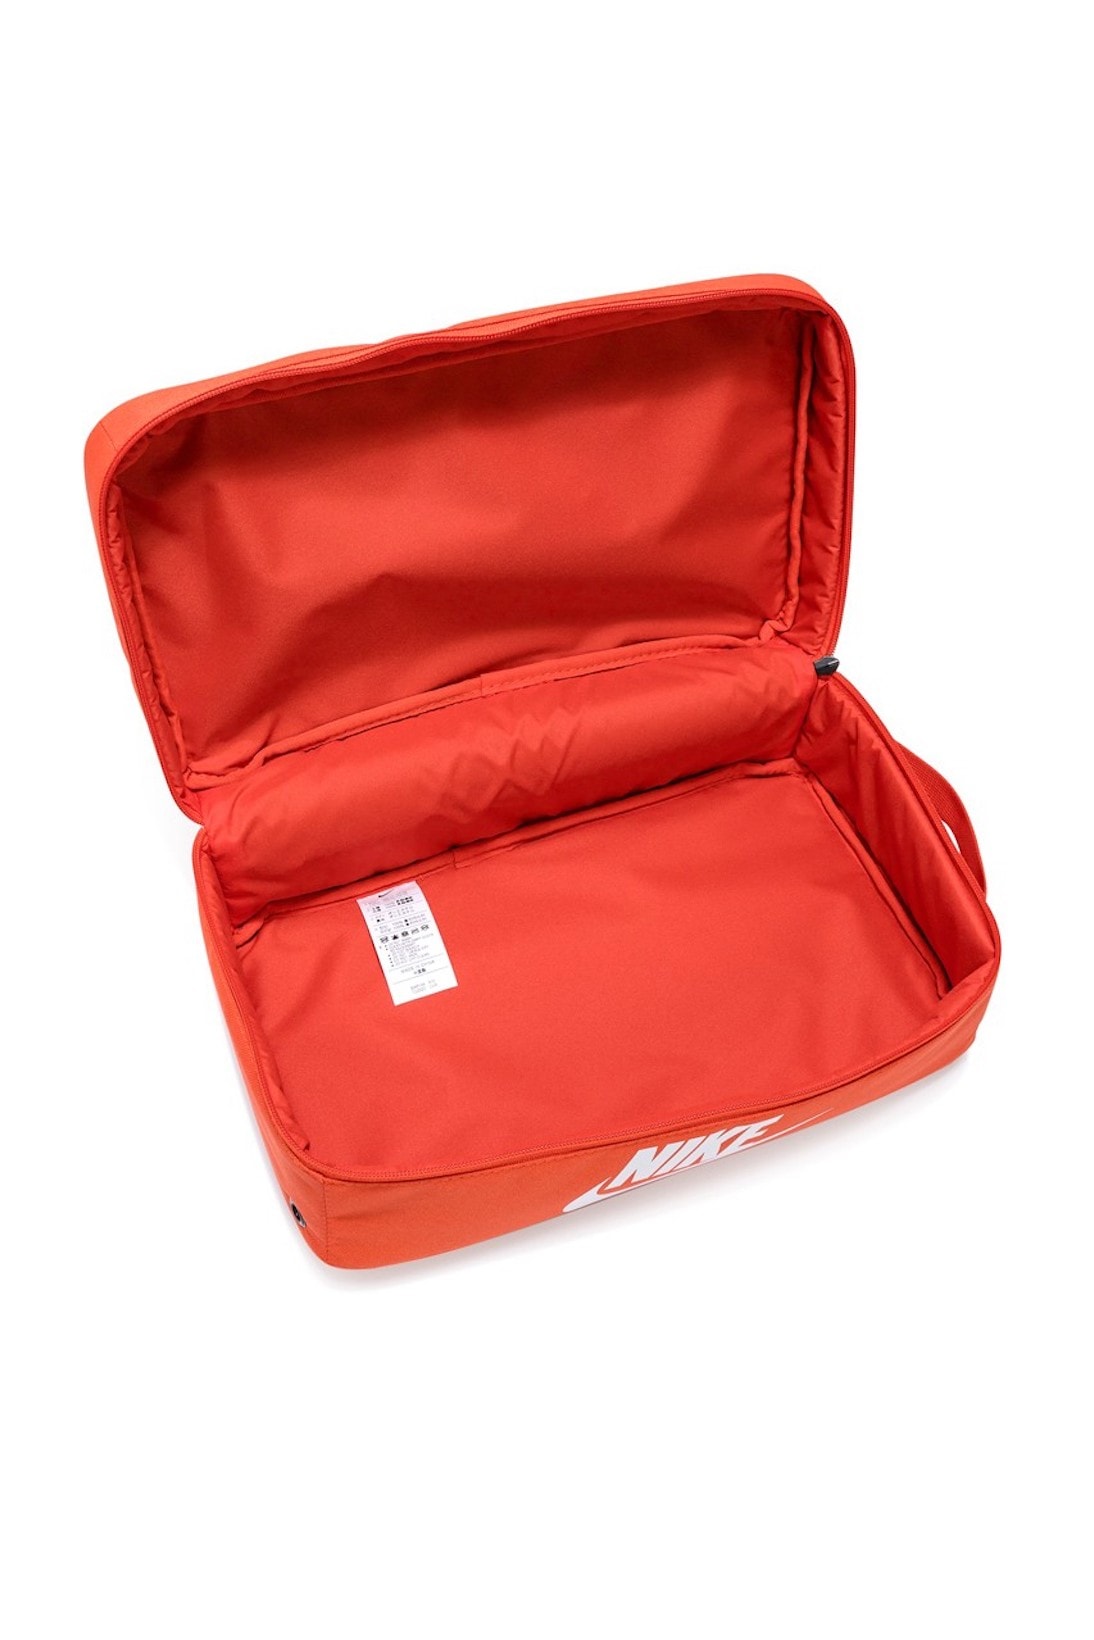 nike sportswear shoebox bag orange white inside